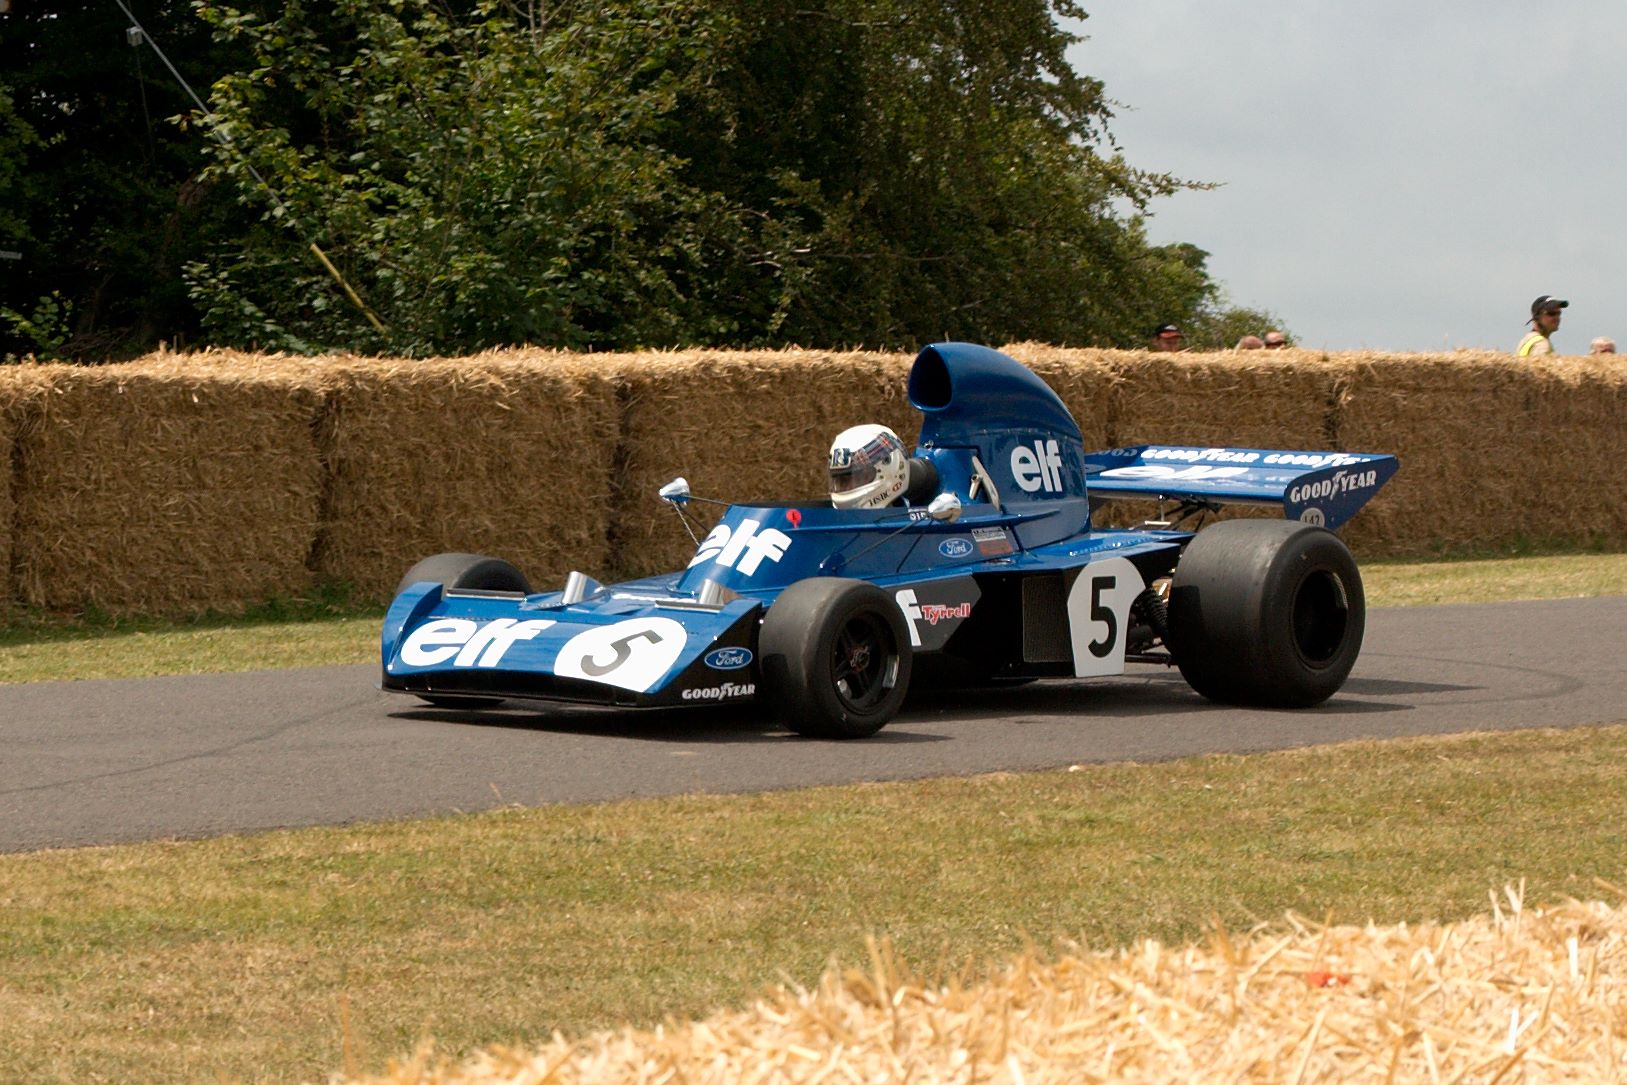 File:Tyrrell 006 at Goodwood 2010.jpg - Wikimedia Commons